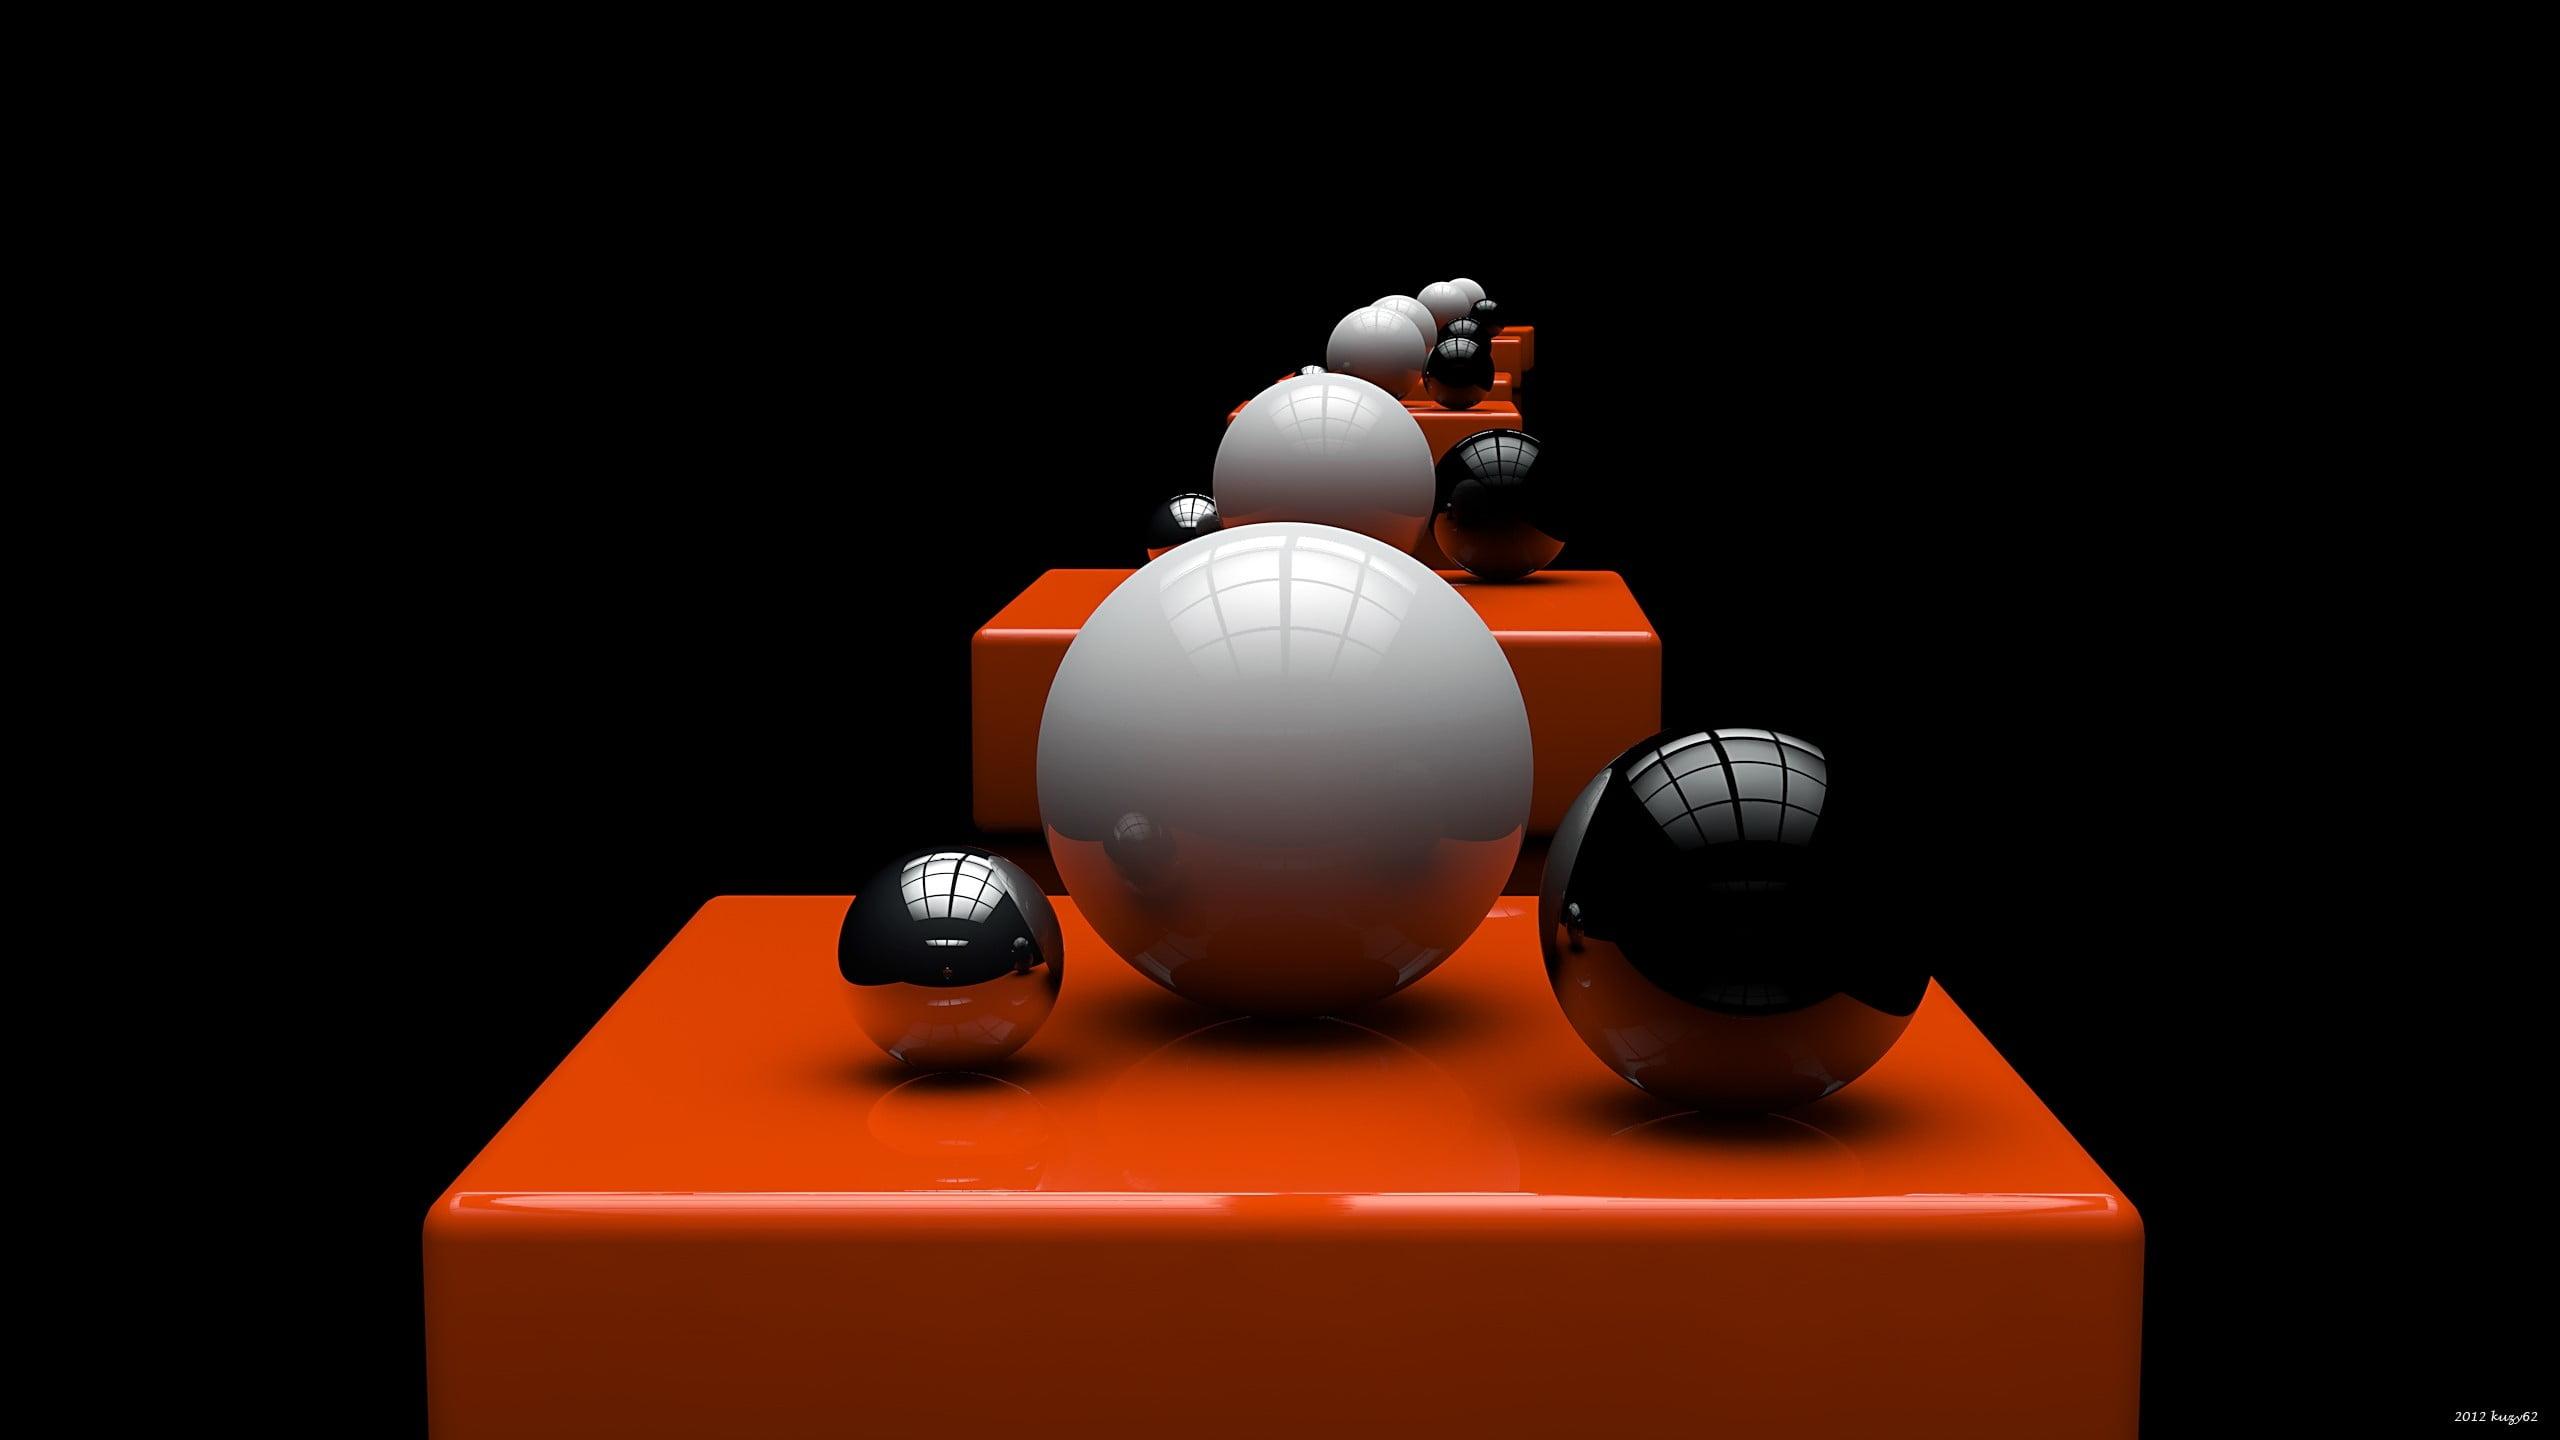 Two black and one white balls on orange platform optical